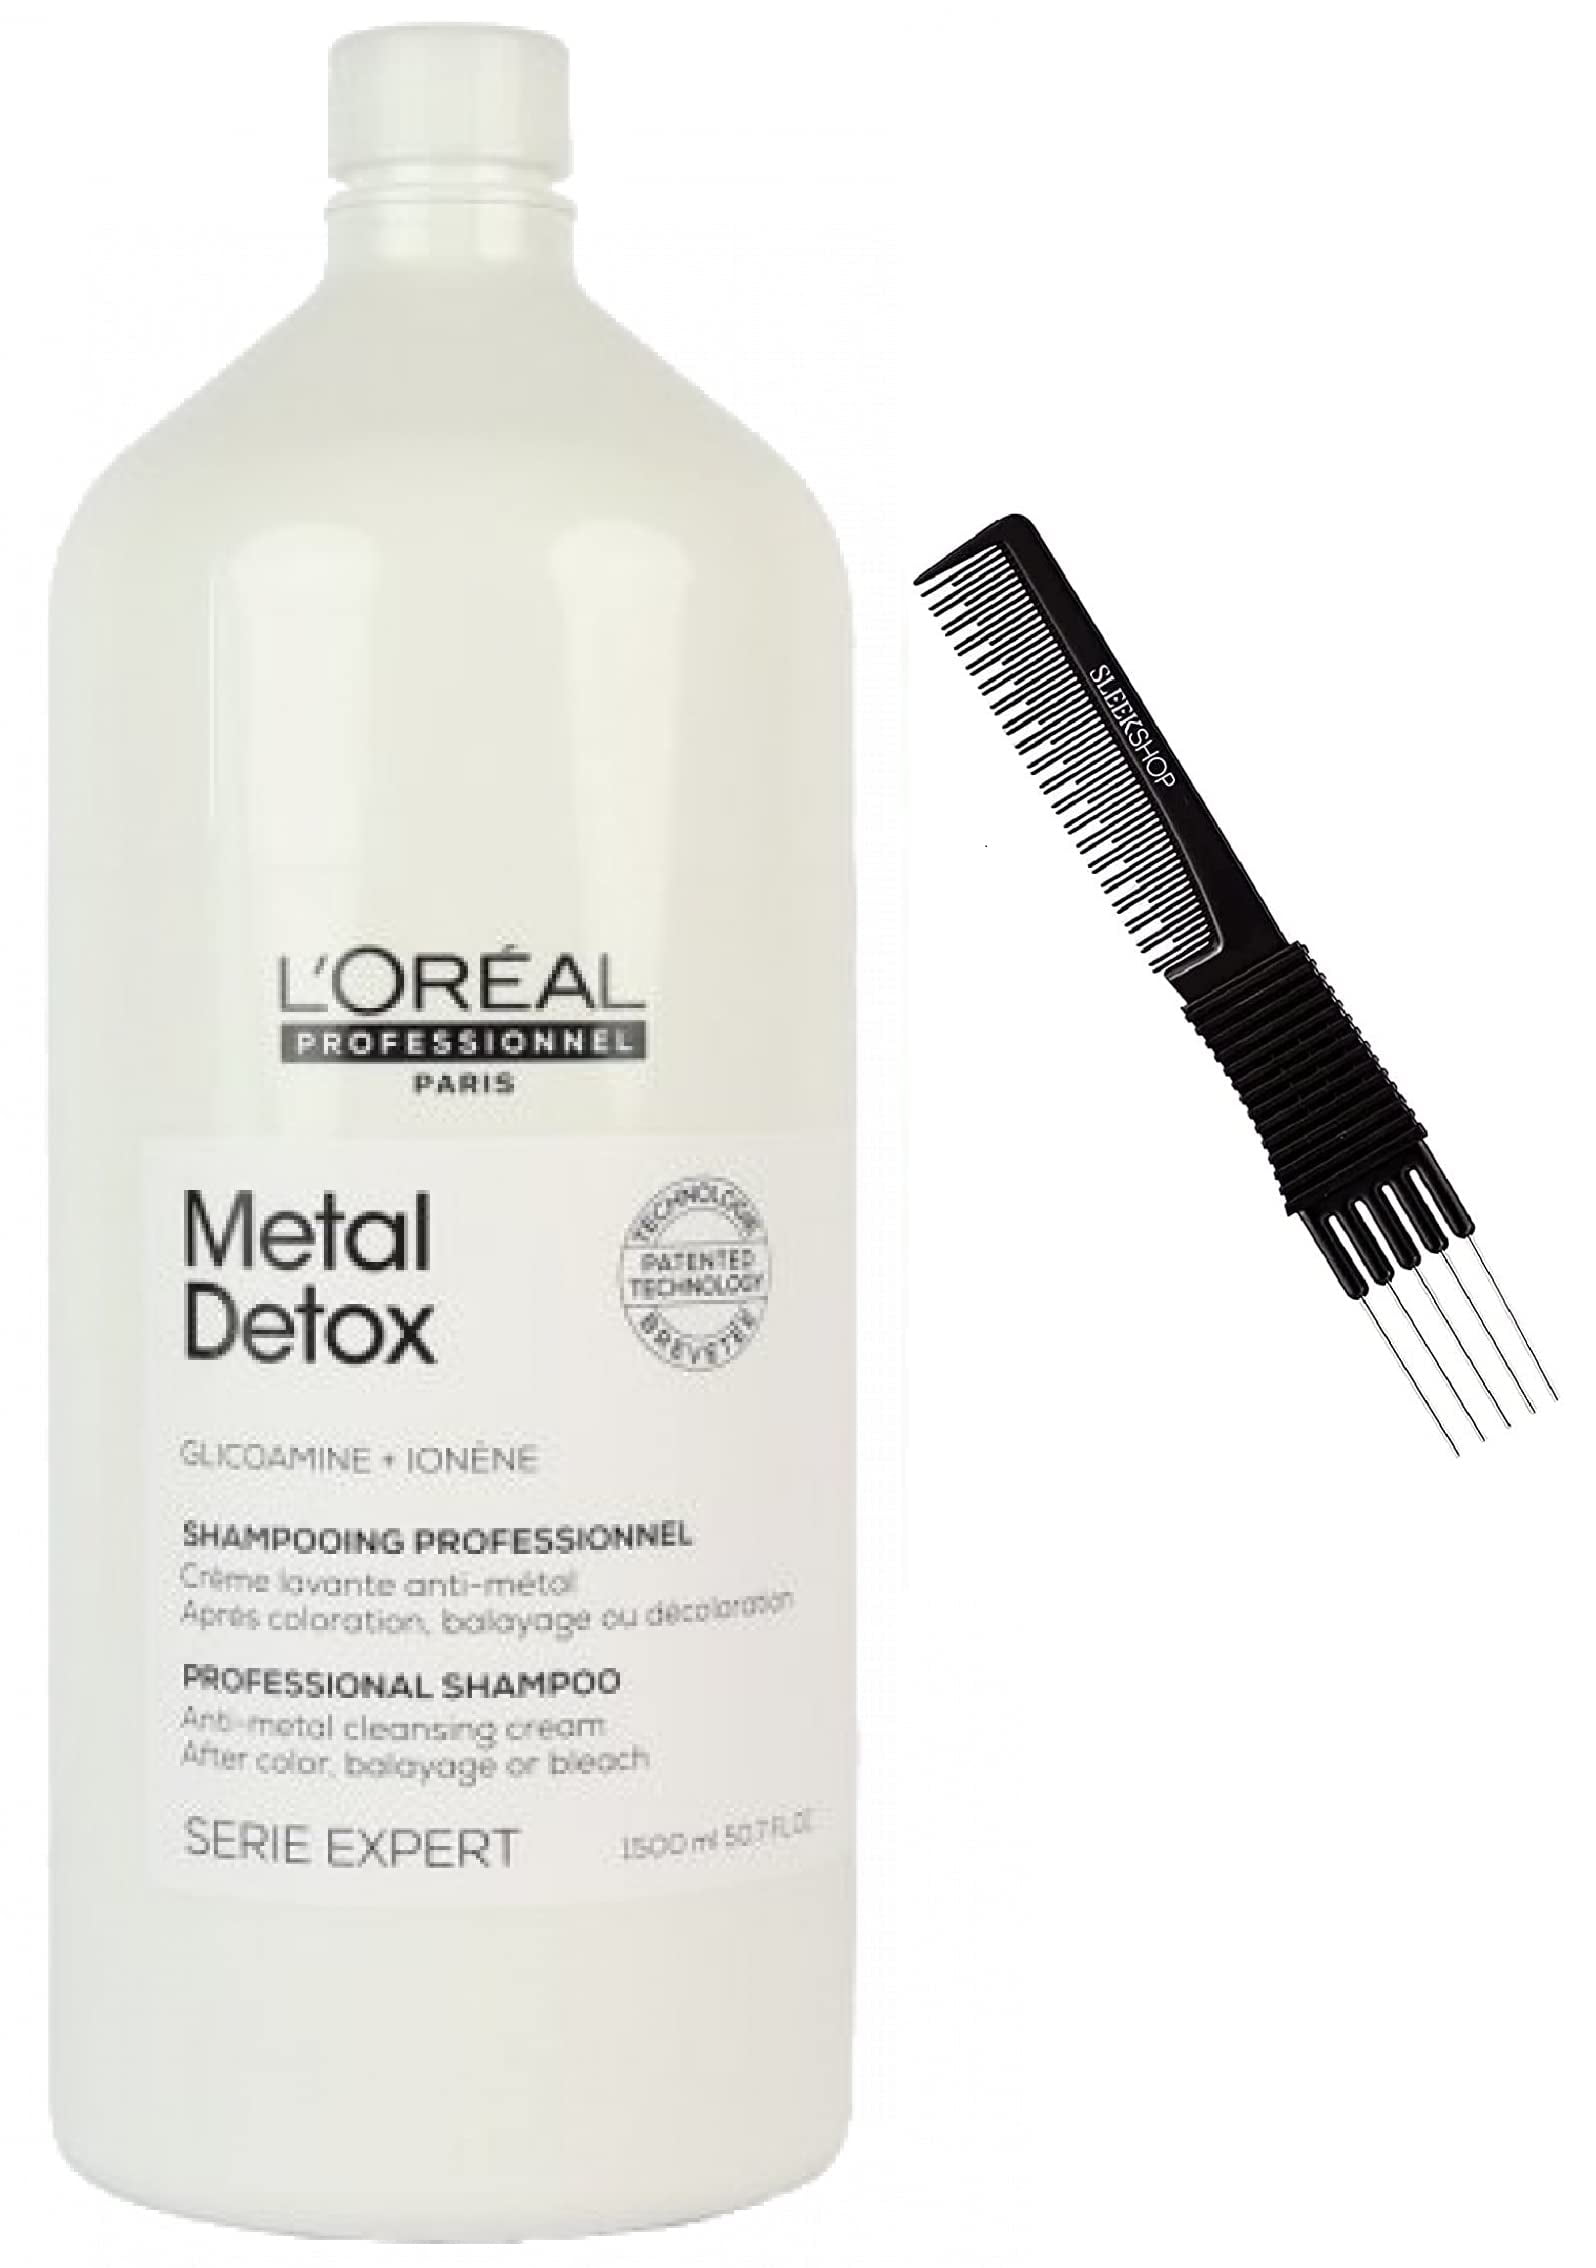 L'oreal SERIE EXPERT Metal Detox Professional Shampoo, Anti-Metal Cleansing  Cream After Hair Color, Balayage, or Bleach (w/ Sleek Loreal Teasing Comb)  (METAL DETOX SHAMPOO  oz / 1500ml) 